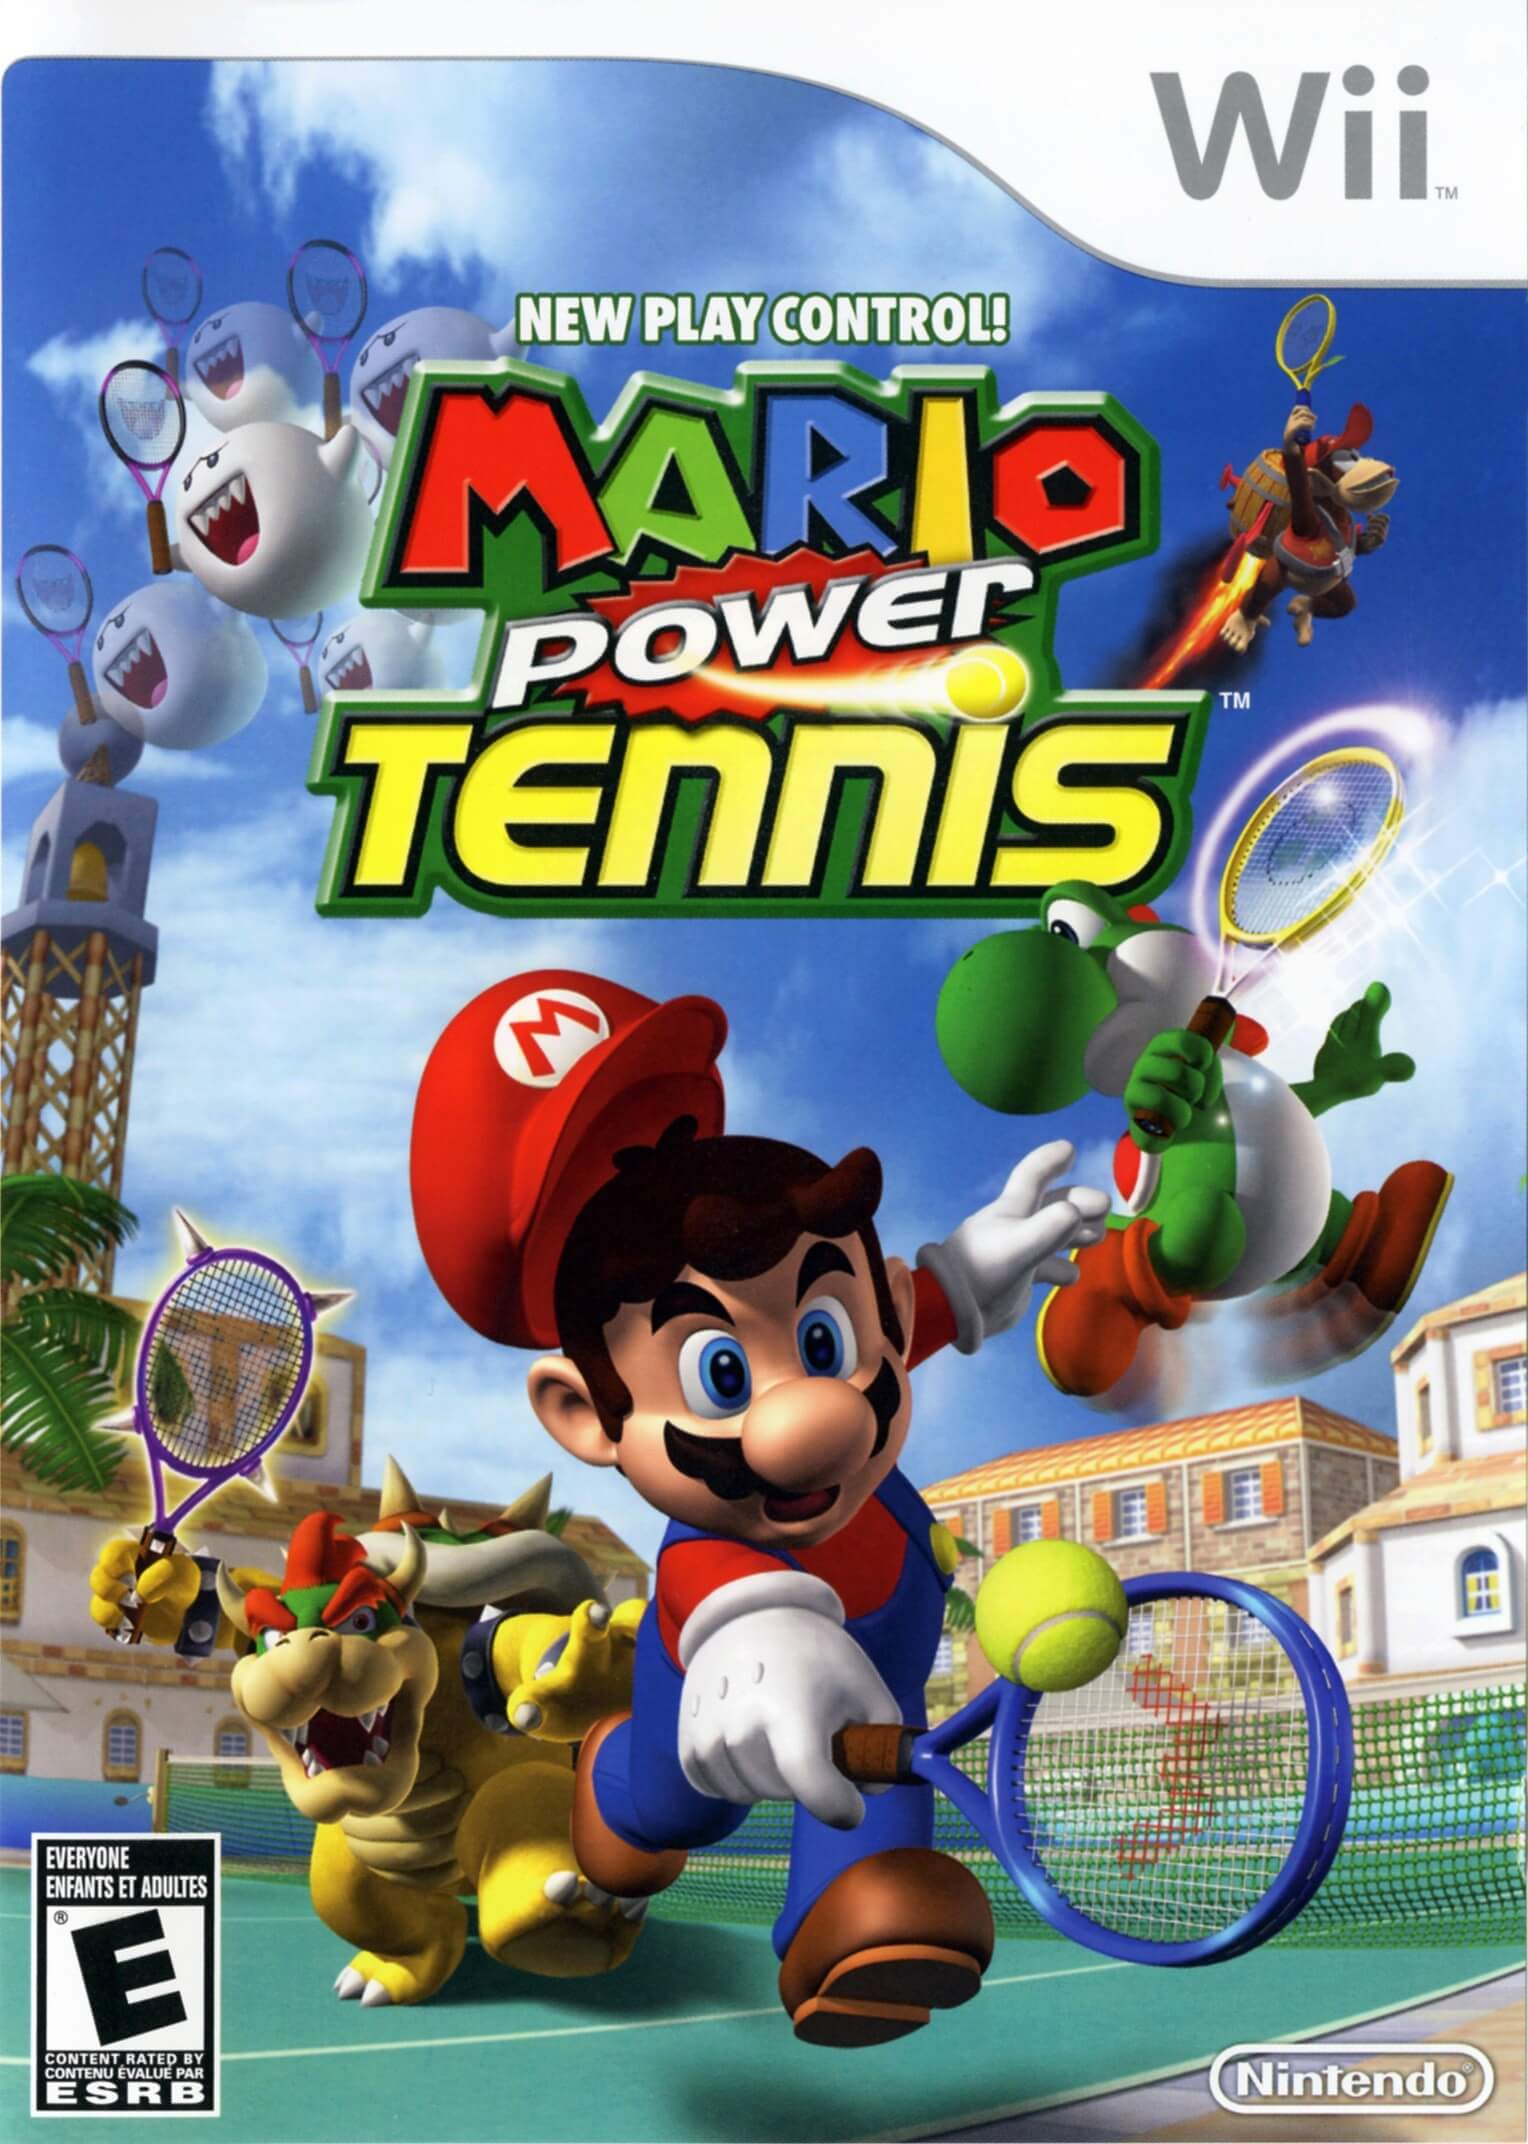 Mario Power Tennis - Wii Game ROM - Nkit & WBFS Download